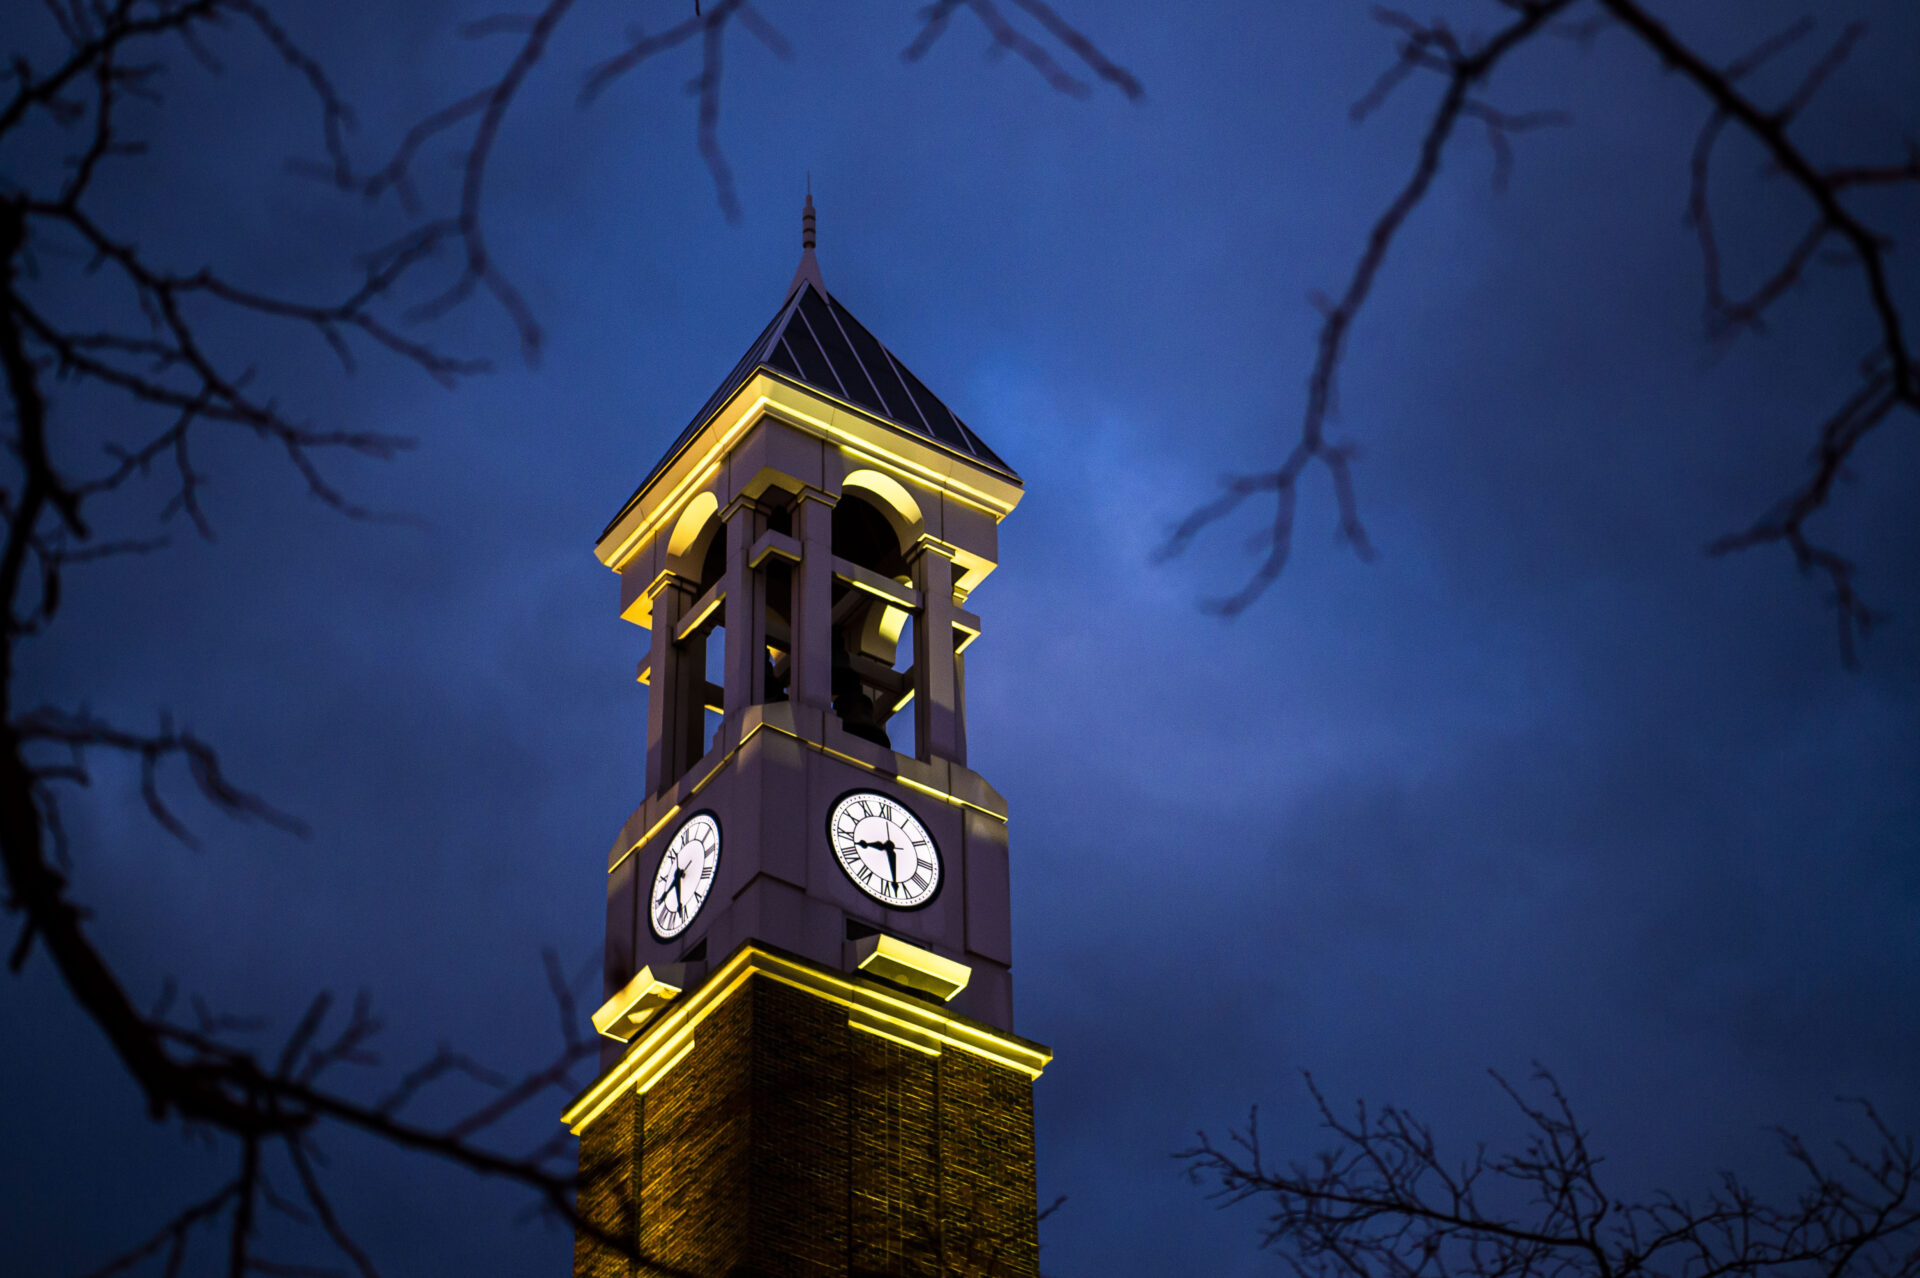 Clock tower lit at night